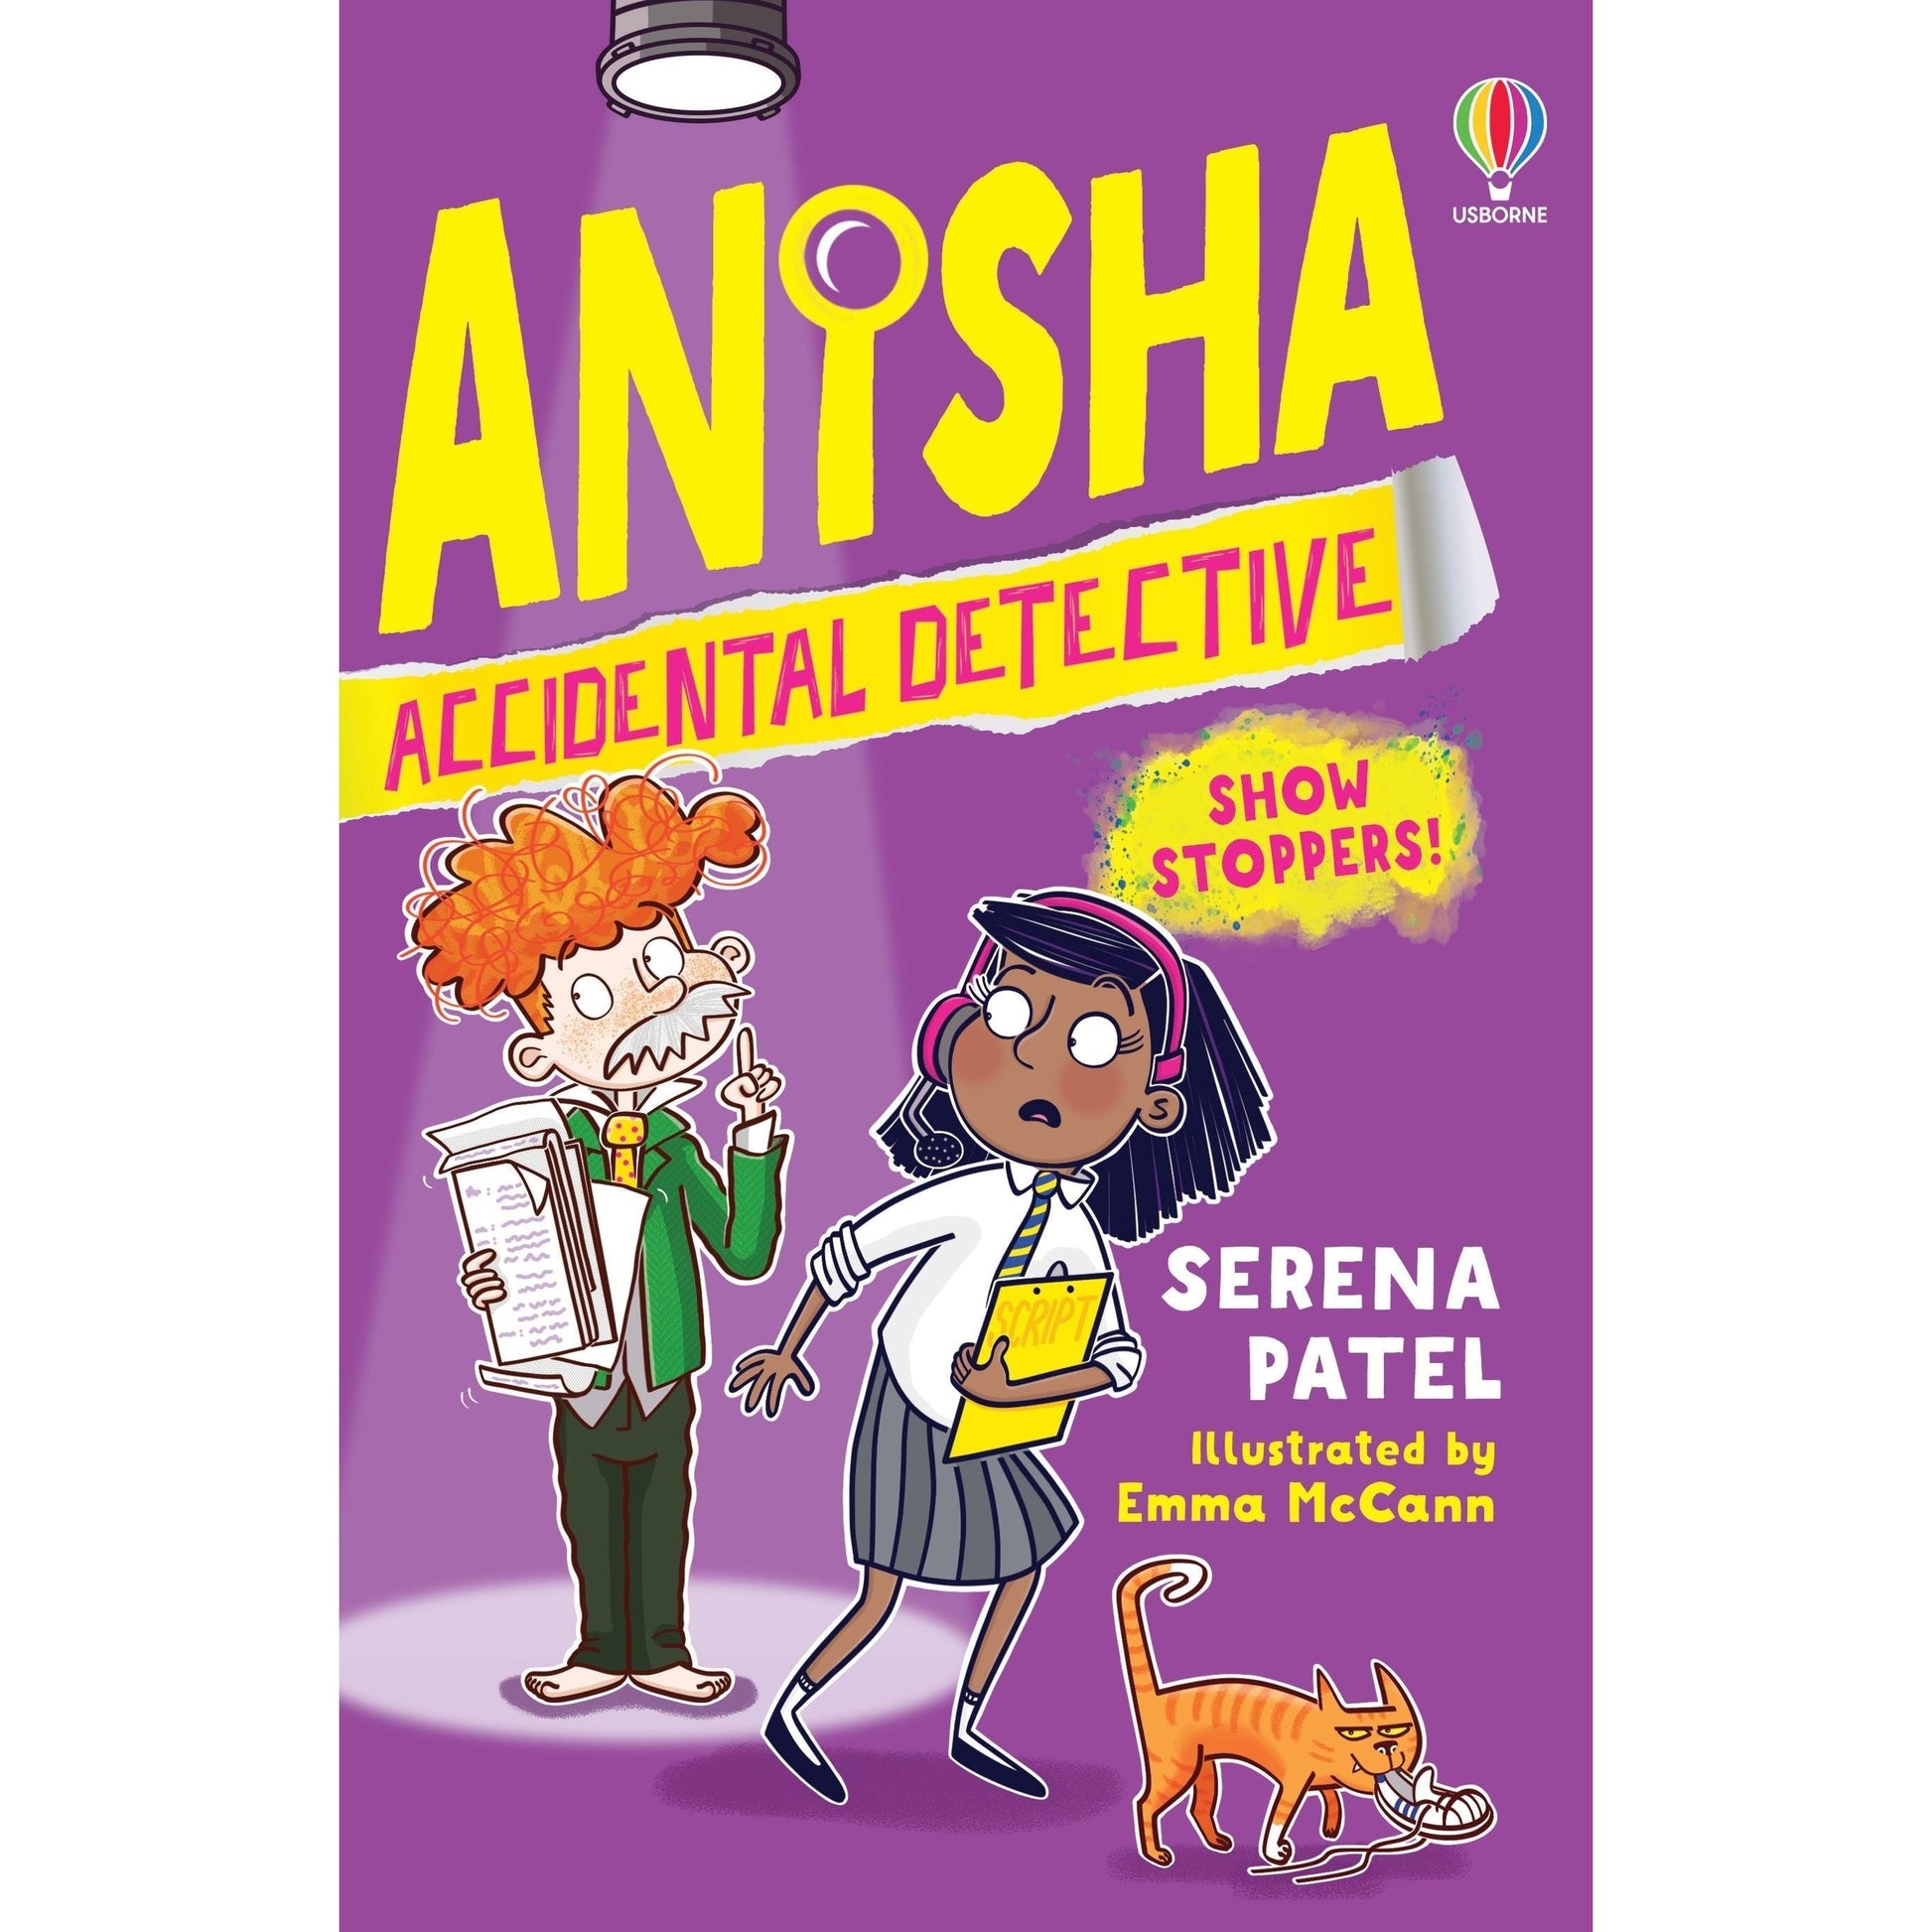 Anisha Accidental Detective: Show Stoppers - Serena Patel & Emma McCann